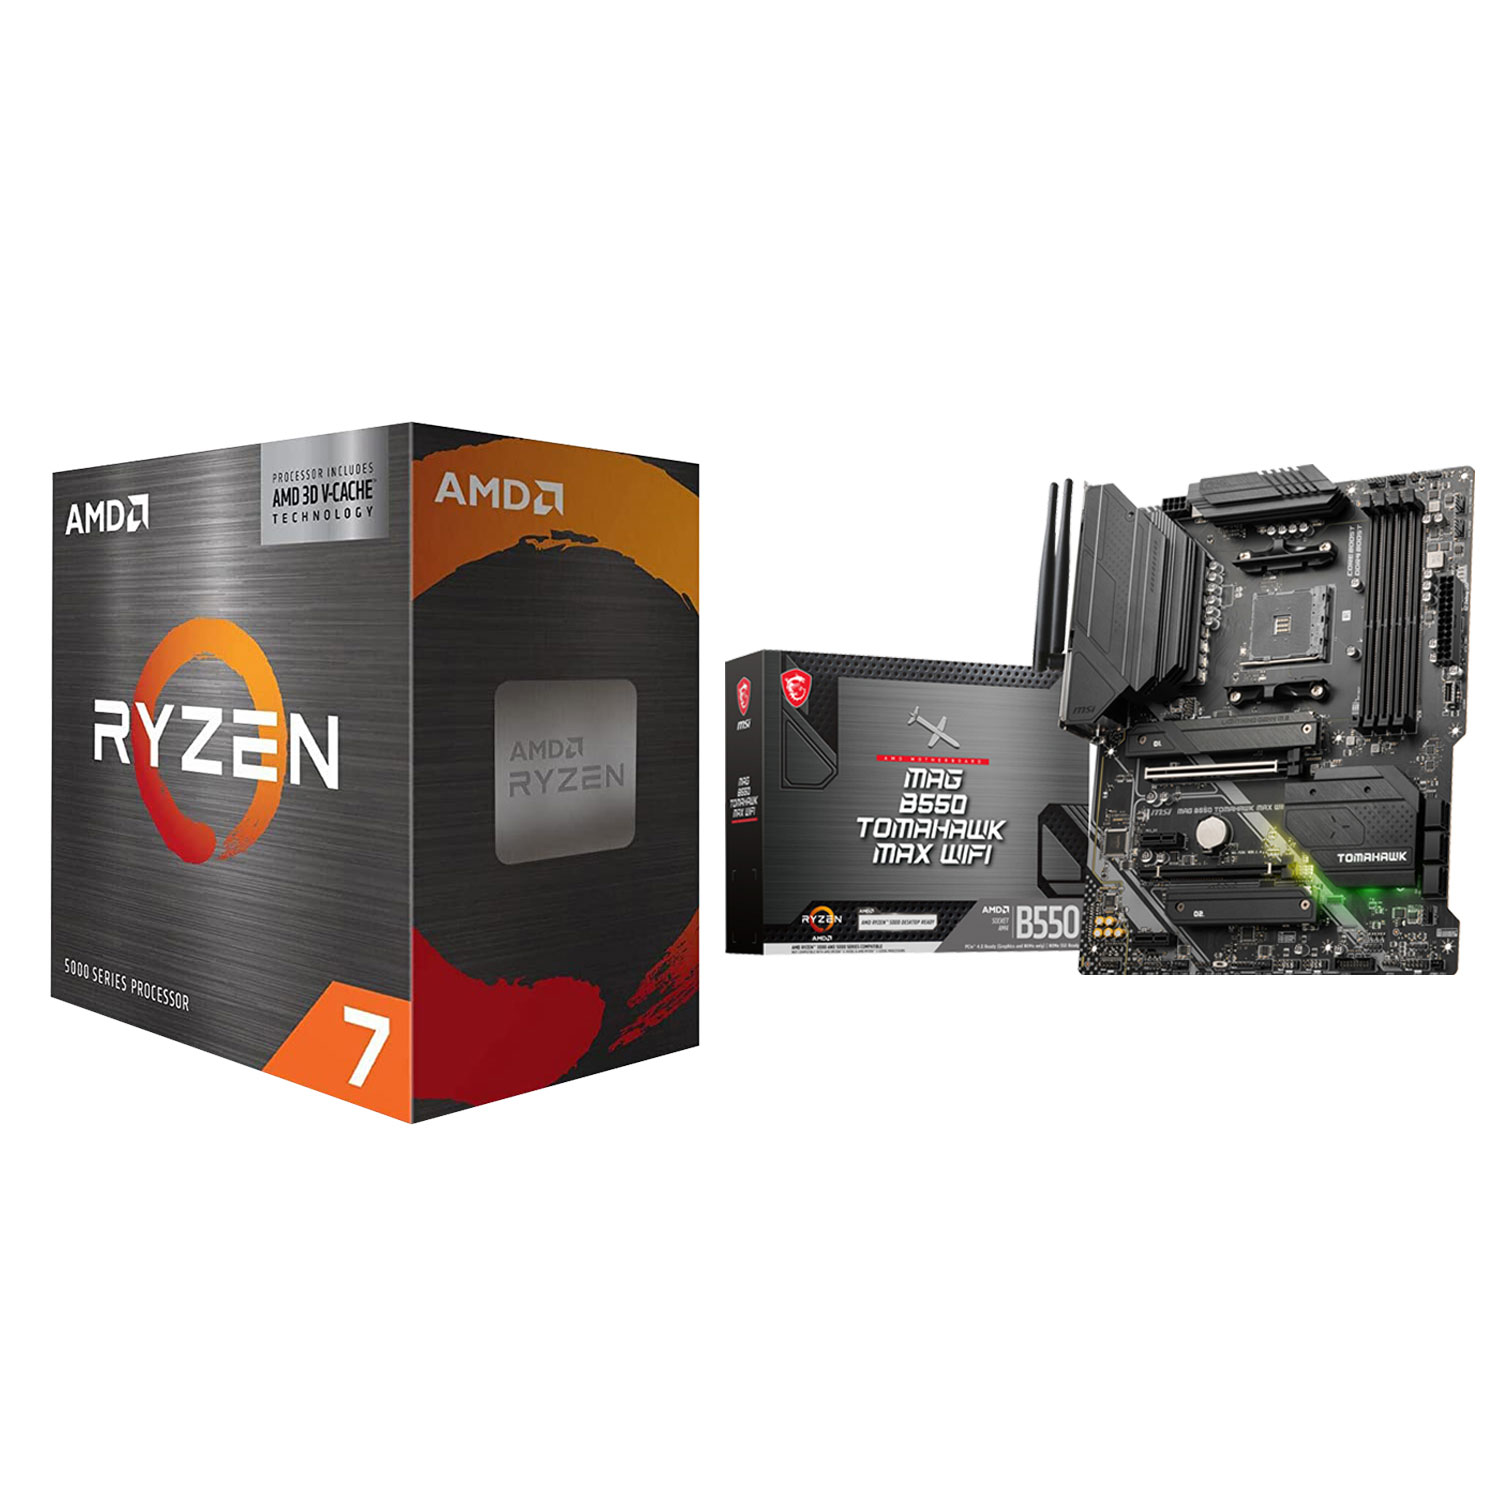 AMD Ryzen 7 5700X3D 8-Core 3GHz AM4 Processor & MSI DDR4 Motherboard for AMD Ryzen 3000/4000/5000 Series CPUs